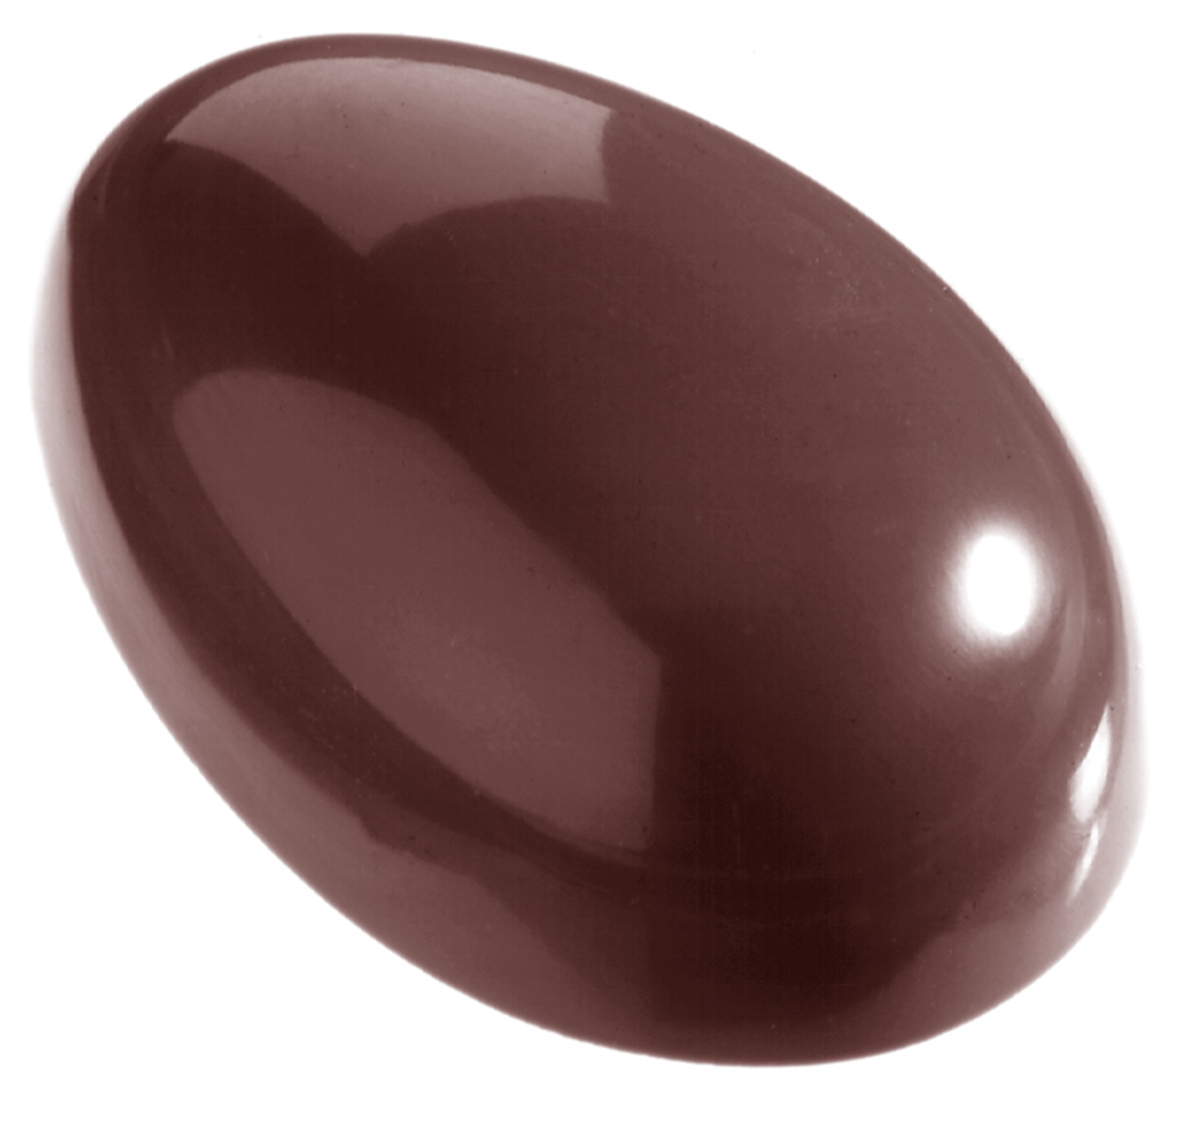 Se Professionel chokoladeform i polycarbonat - Egg smooth 4,3 cm CW1317 hos BageTid.dk